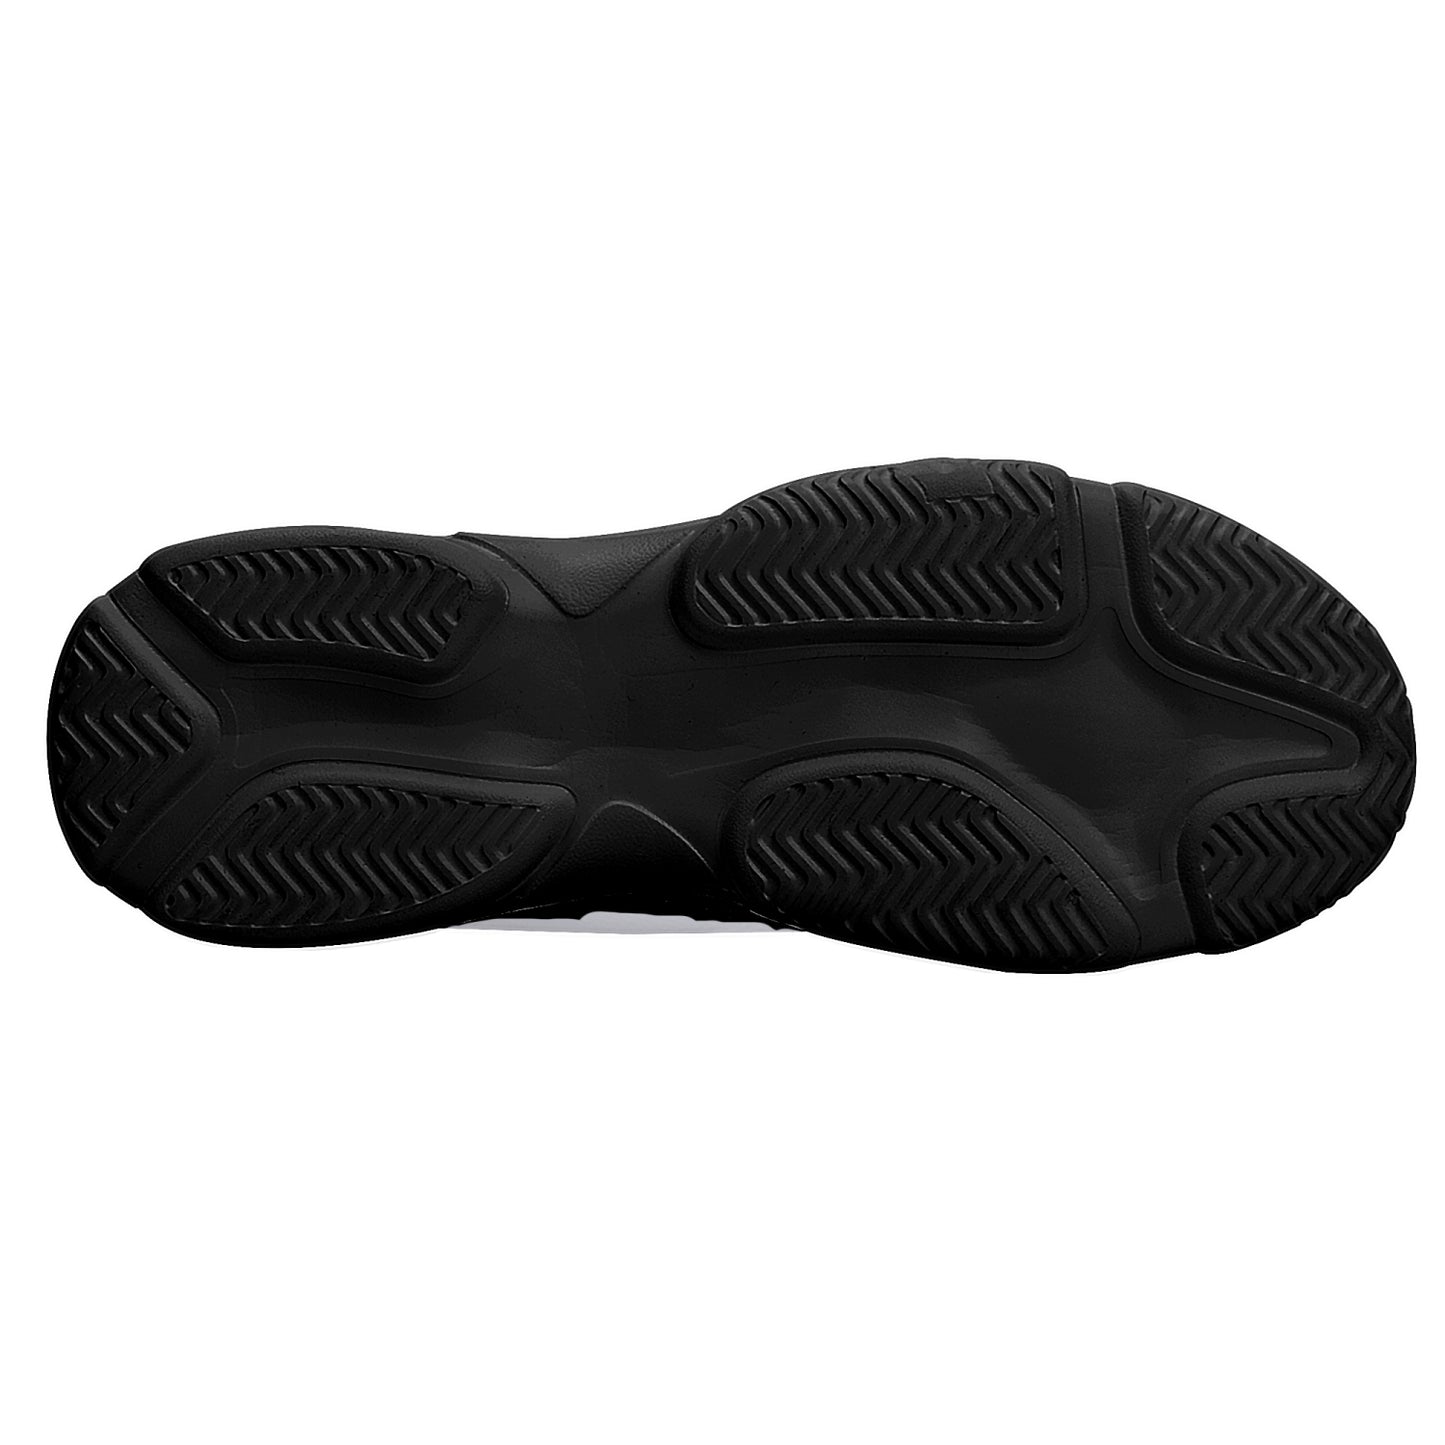 Unisex sneakers "Redone" (White / Black)